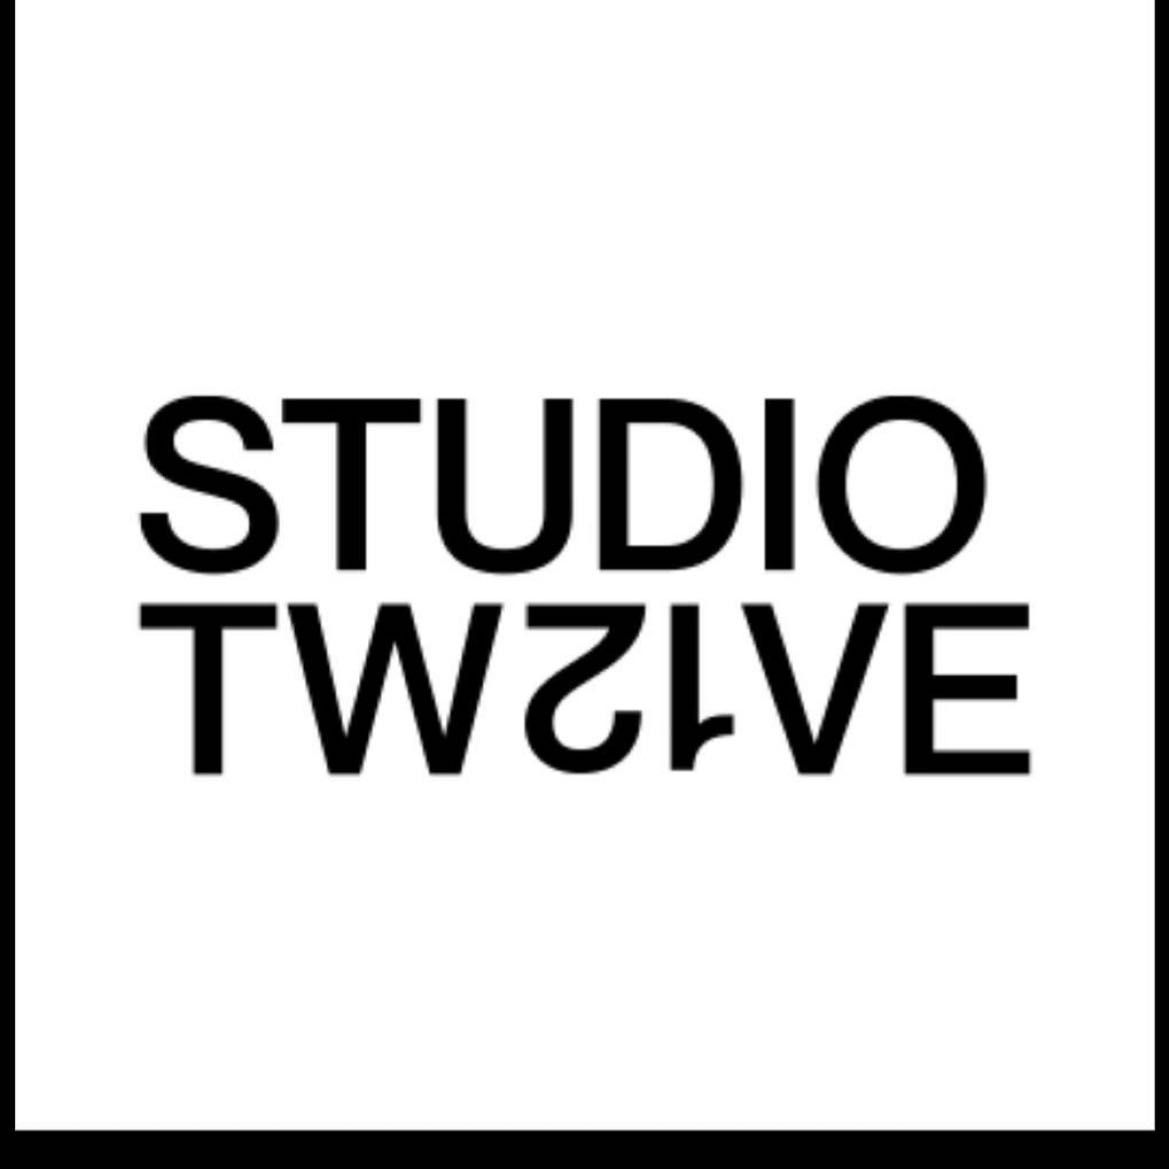 Studio Twelve, 20 Thorntons Arcade, LS1 6LQ, Leeds